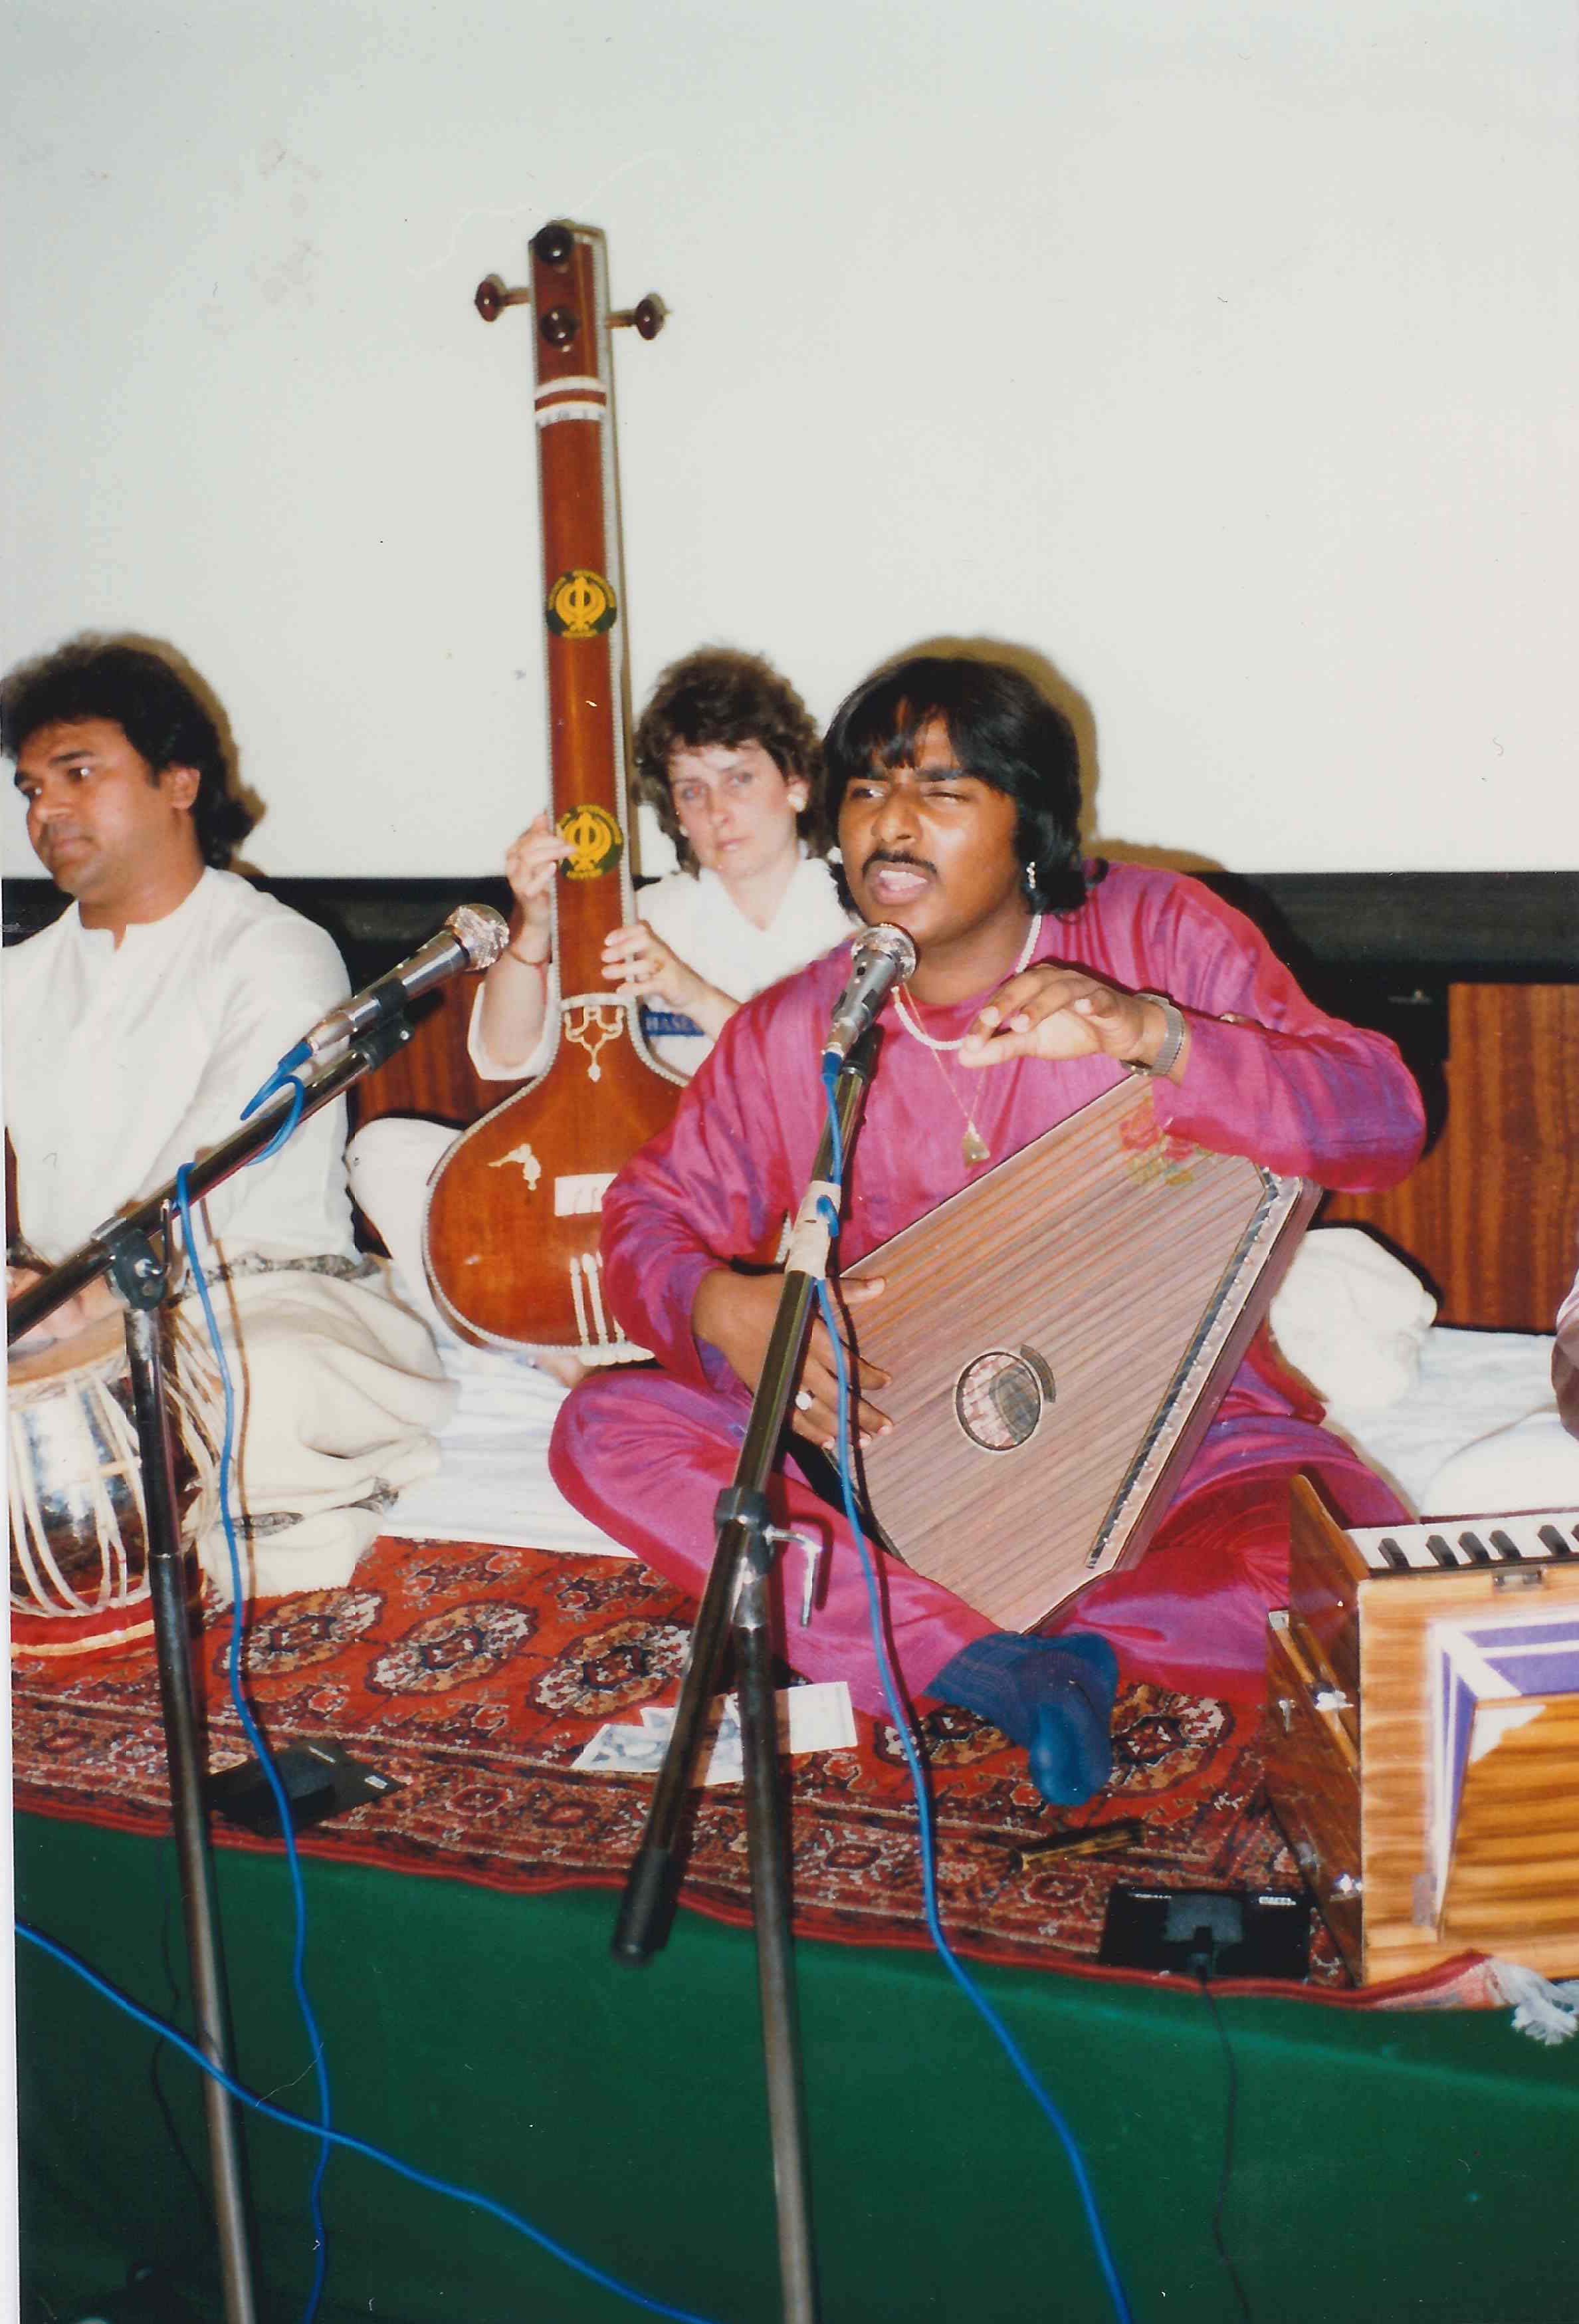 Members of the Asian School Of Music jamming